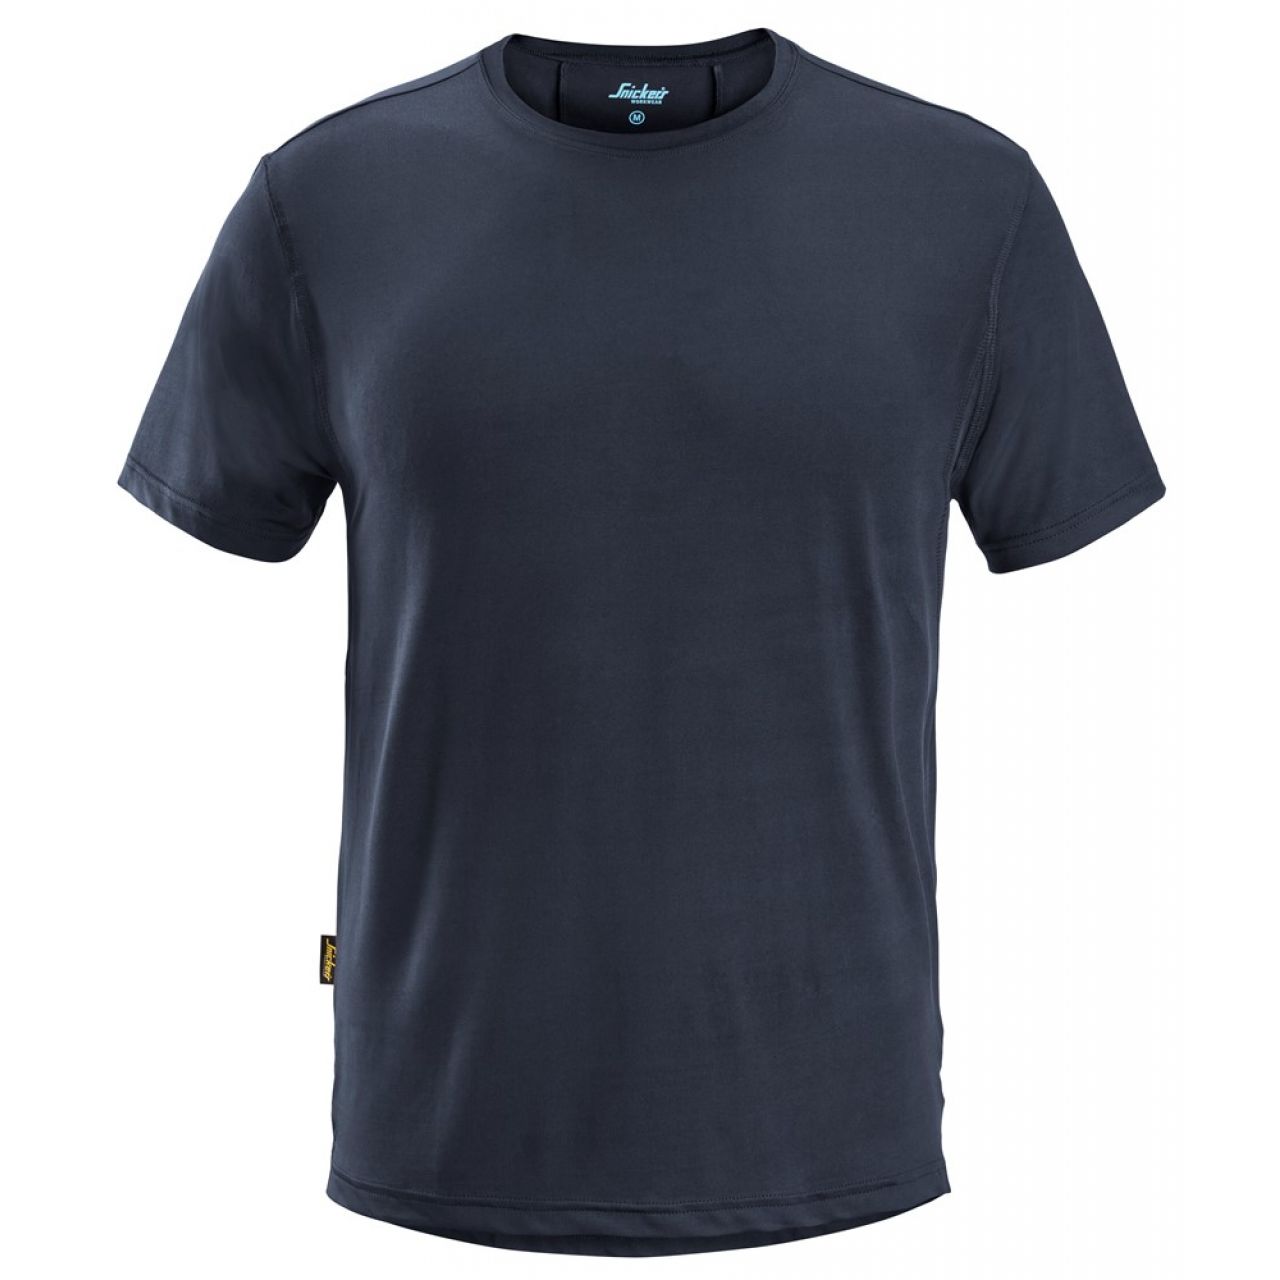 2511 Camiseta de manga corta LiteWork azul marino talla S